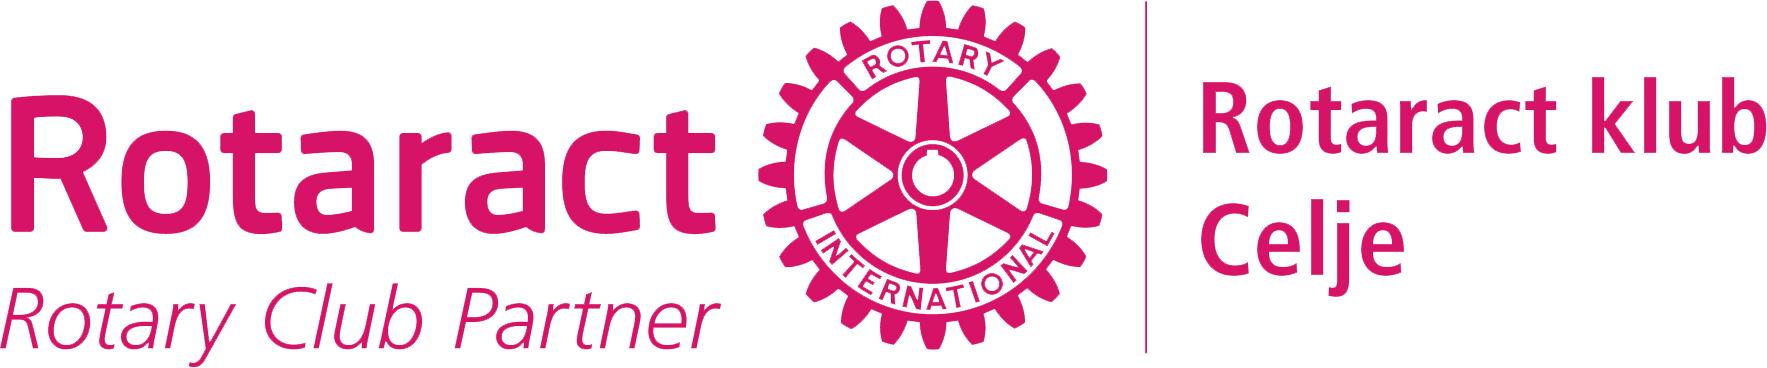 Rotaract klub Celje